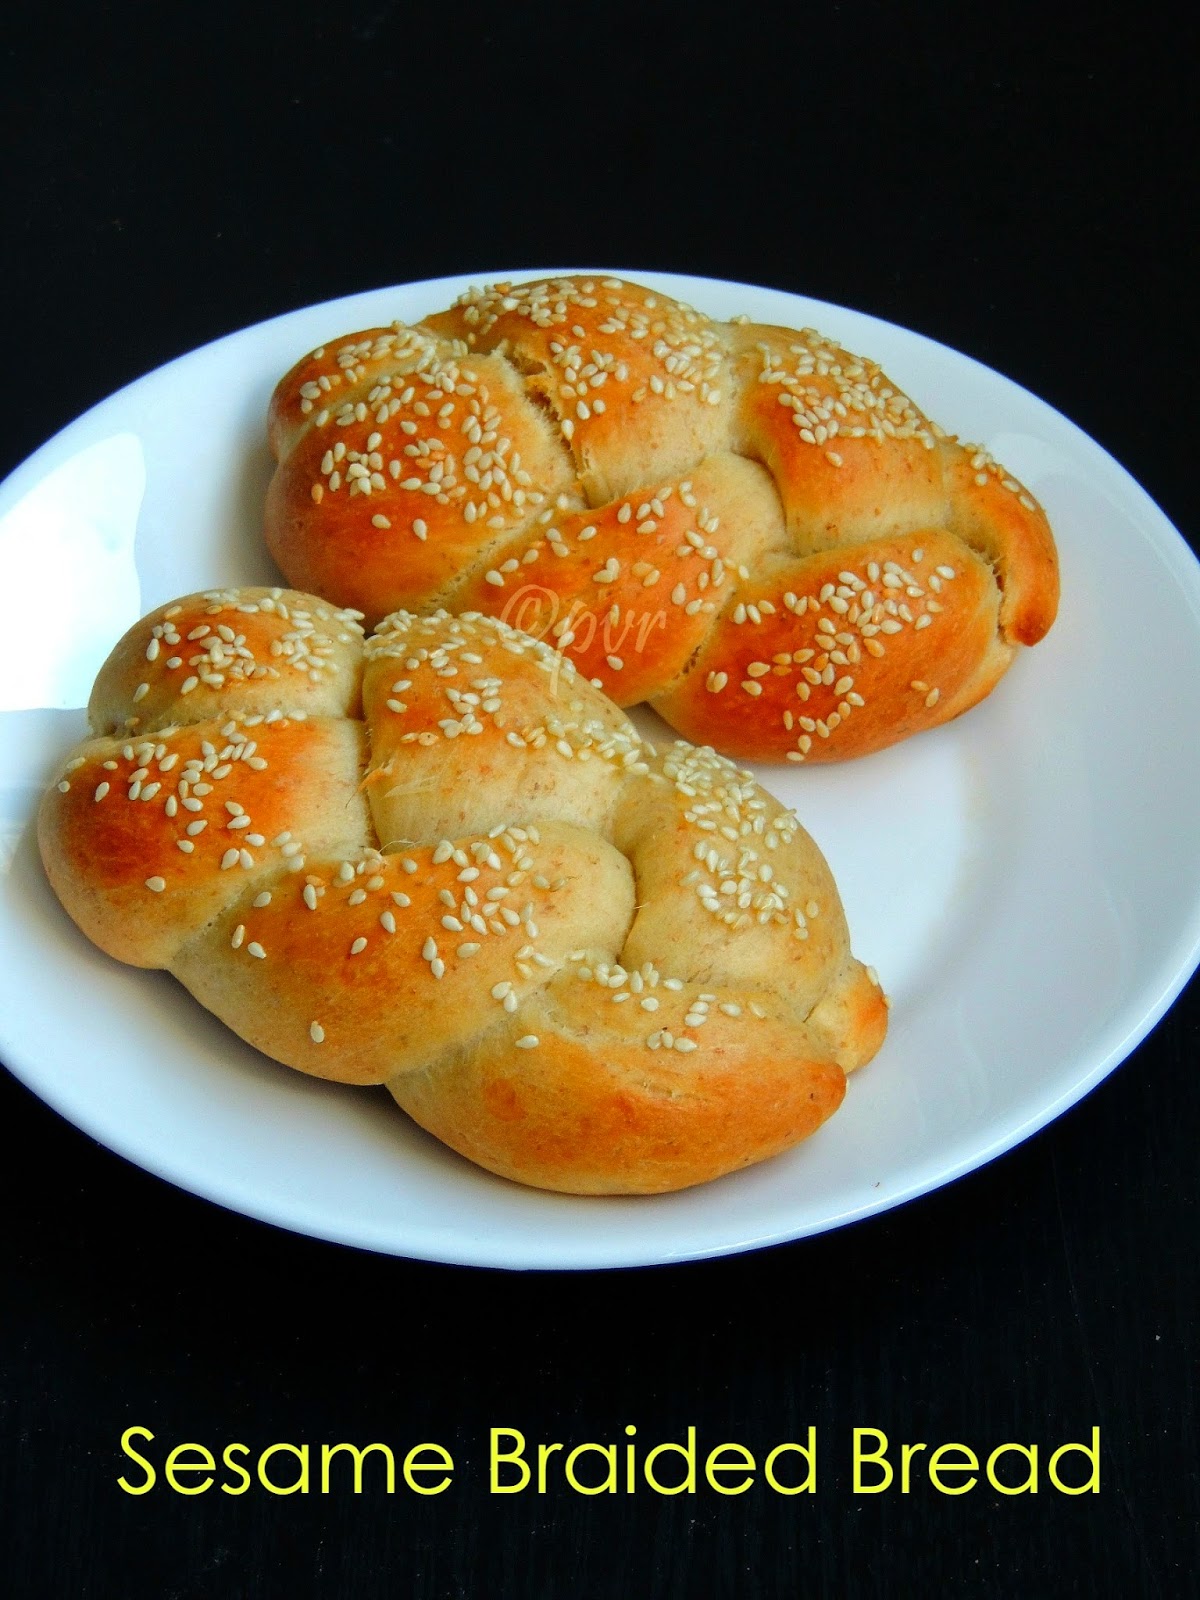 Sesame Braided bread rolls